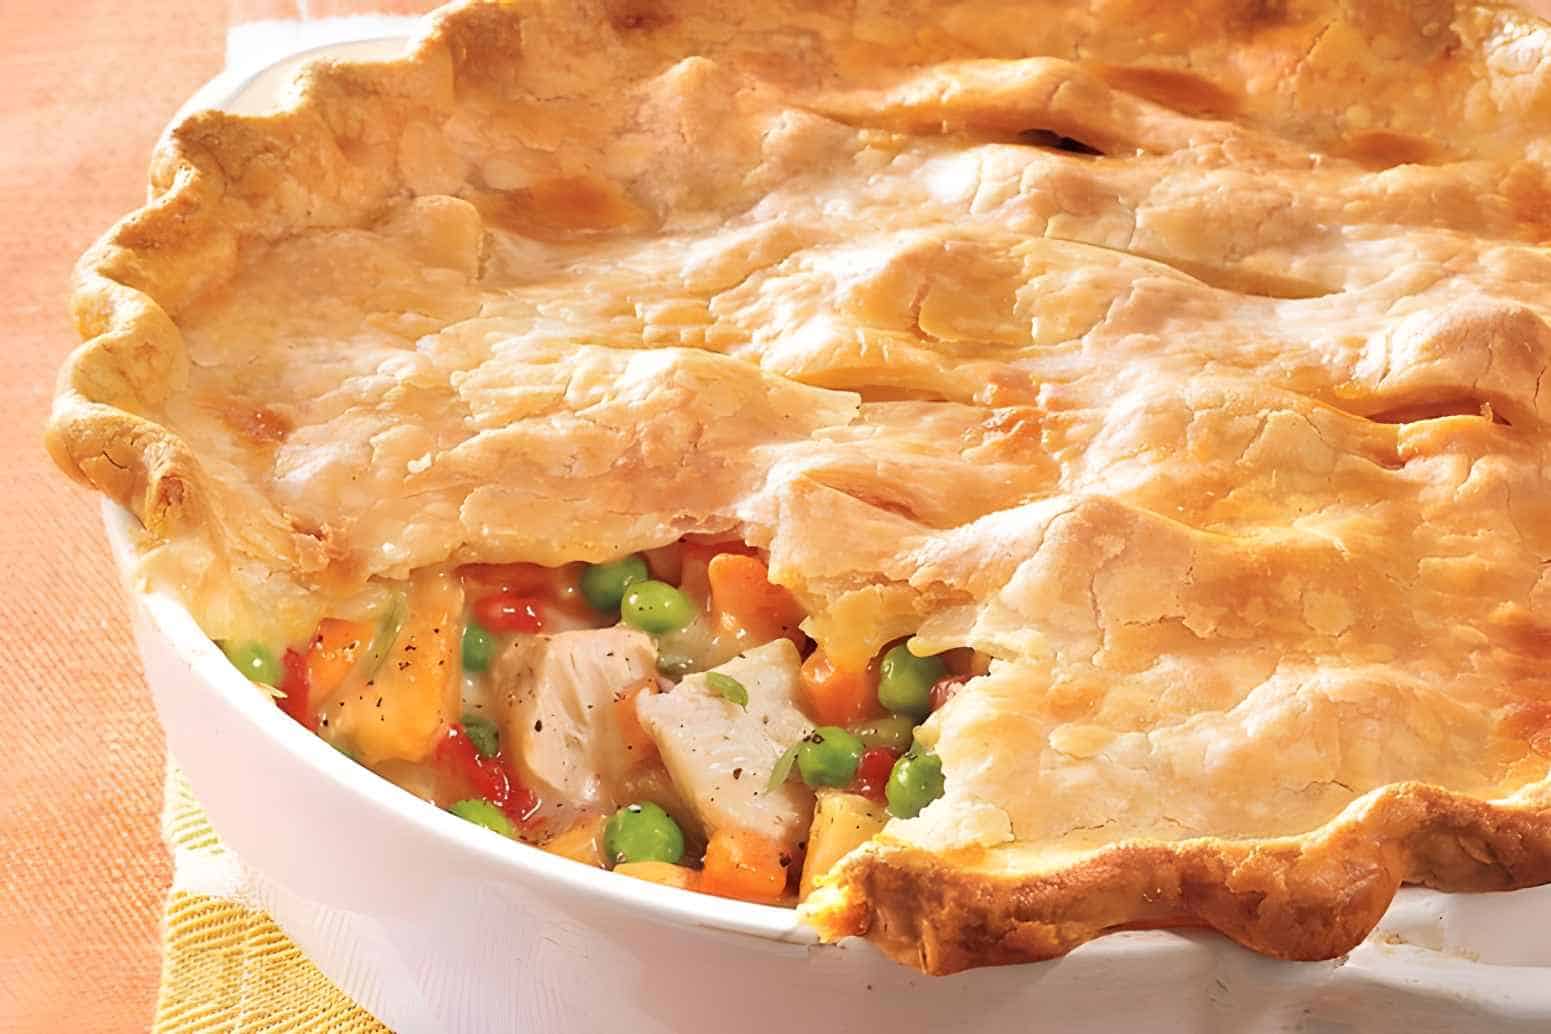 Best Side Dishes for Chicken Pot Pie